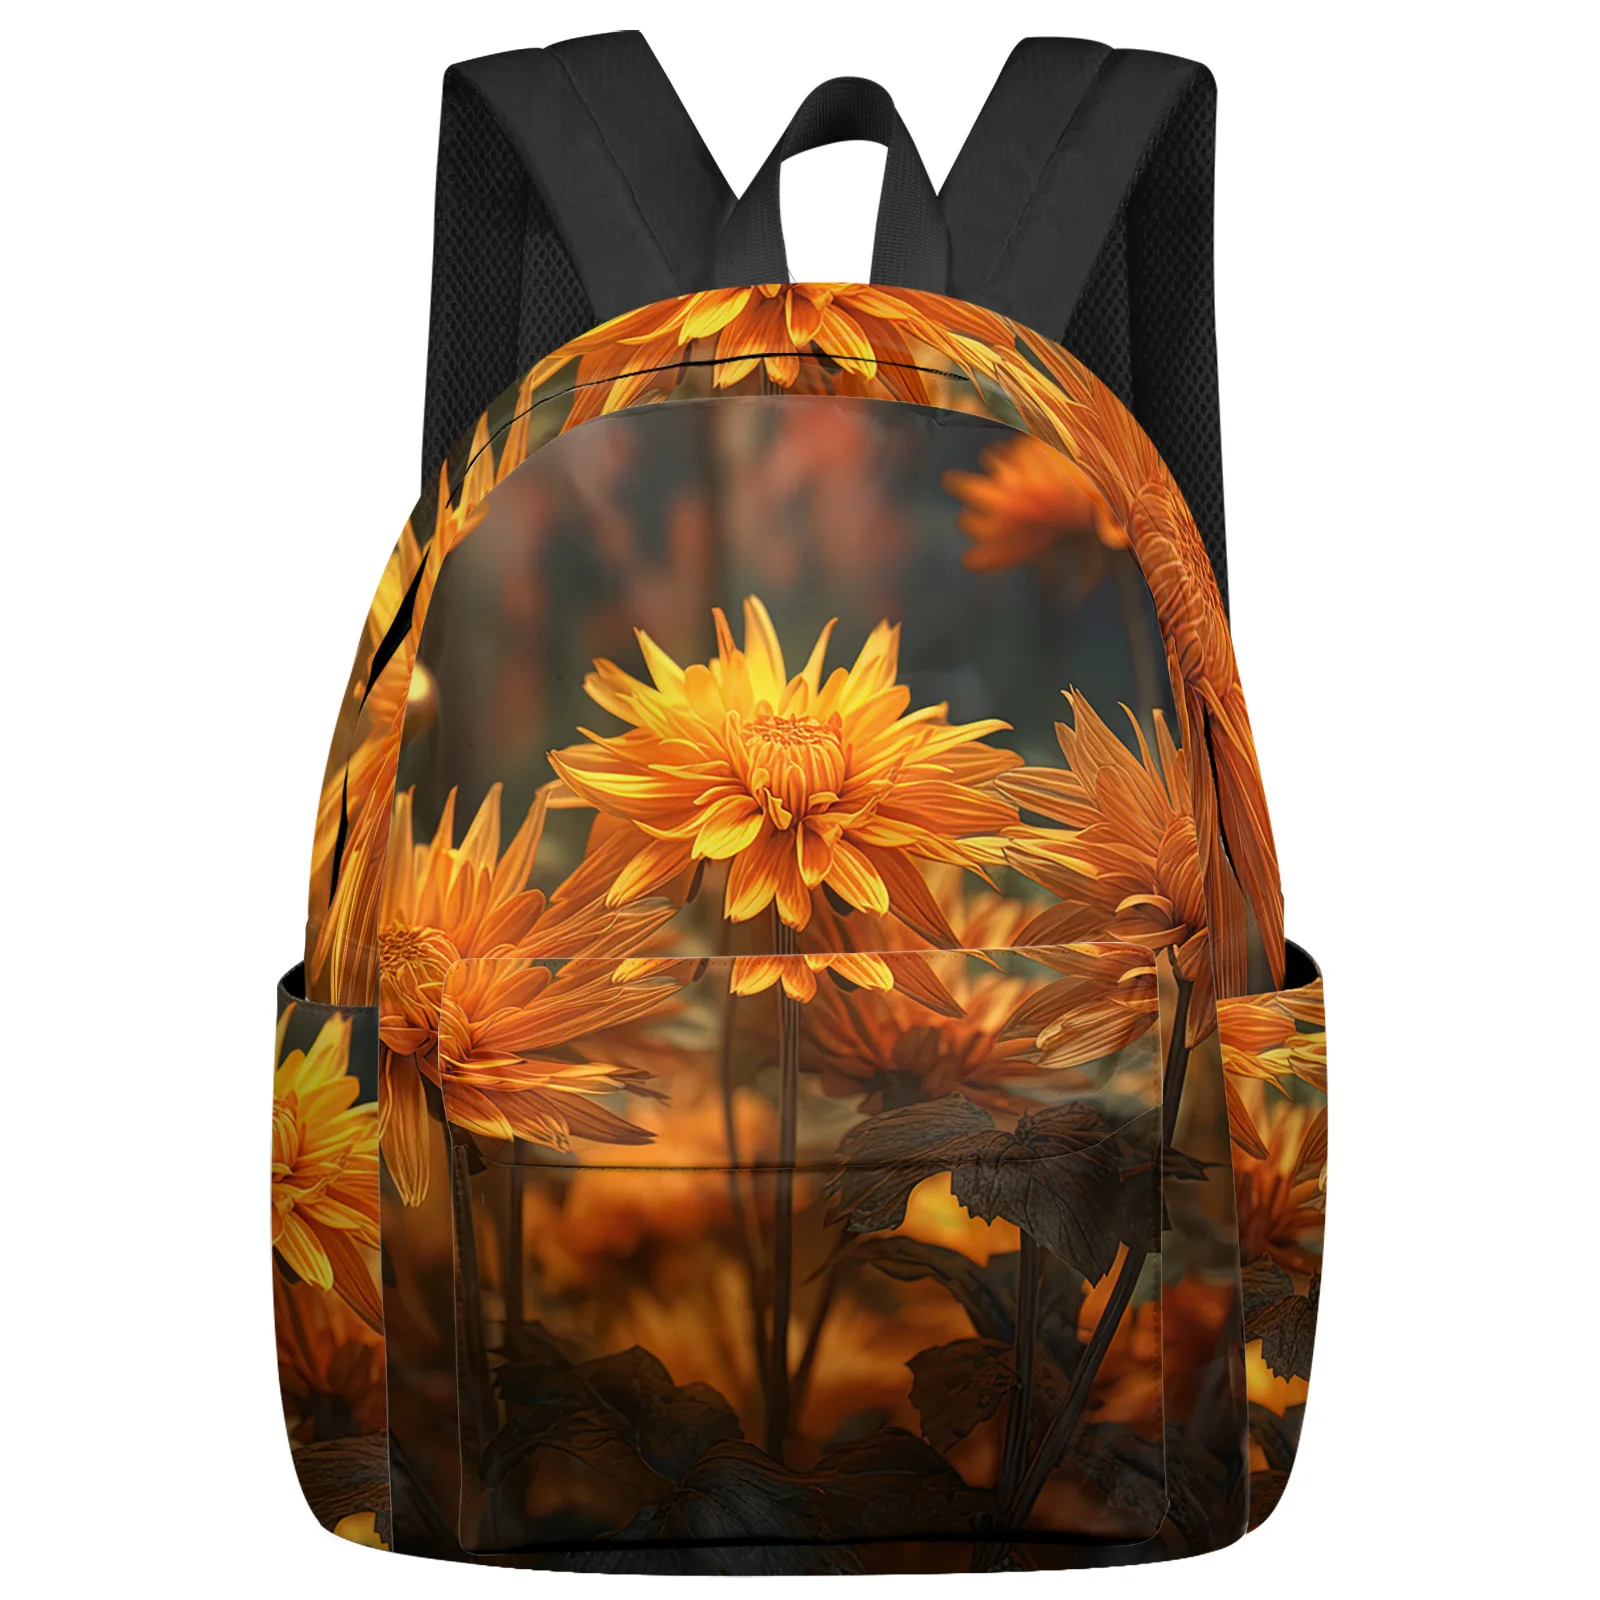 

Chrysanthemum Flower Backpack School Bags for Teenagers Girls Students Laptop Bag Women's Casual Travel Backpack